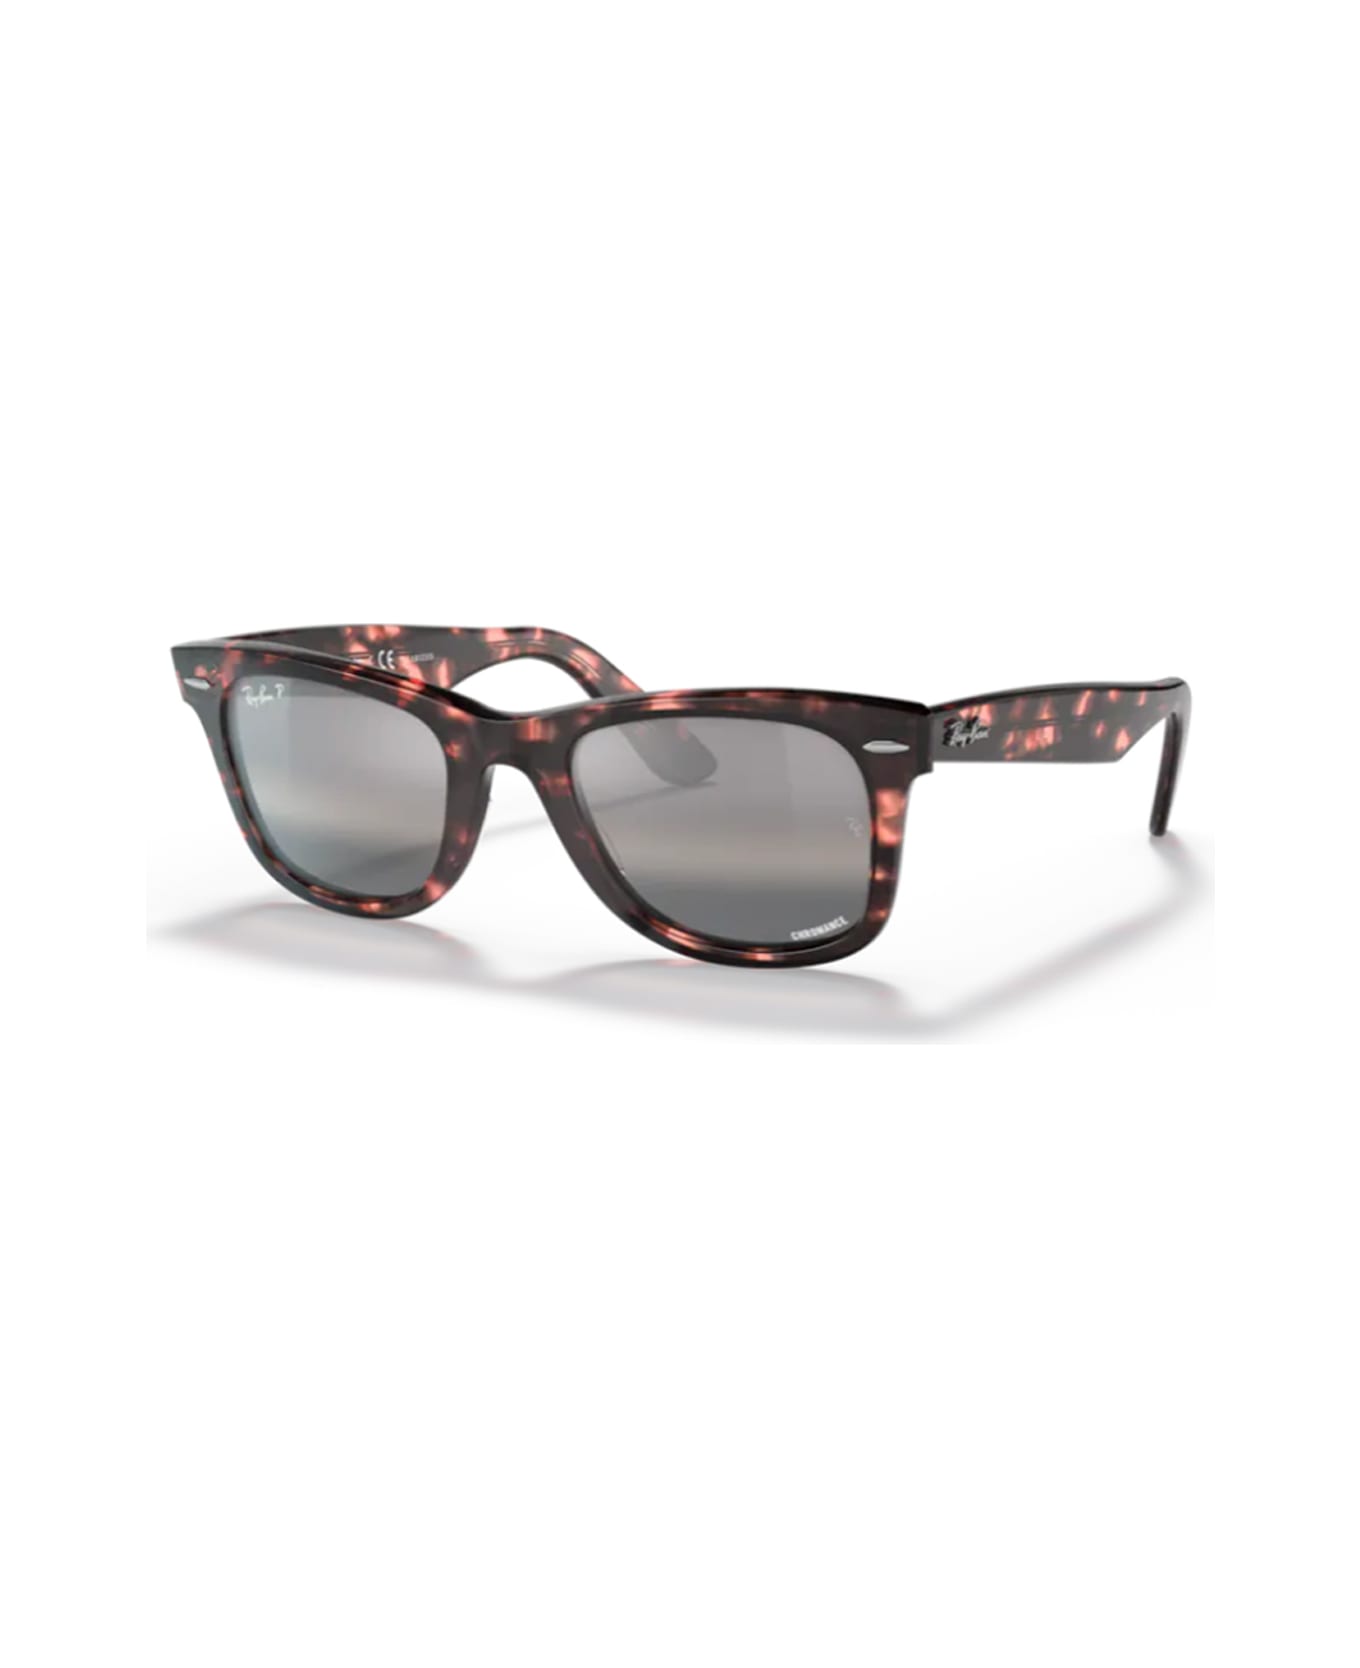 Ray-Ban Rb2140 Wayfarer Sunglasses - Rosa